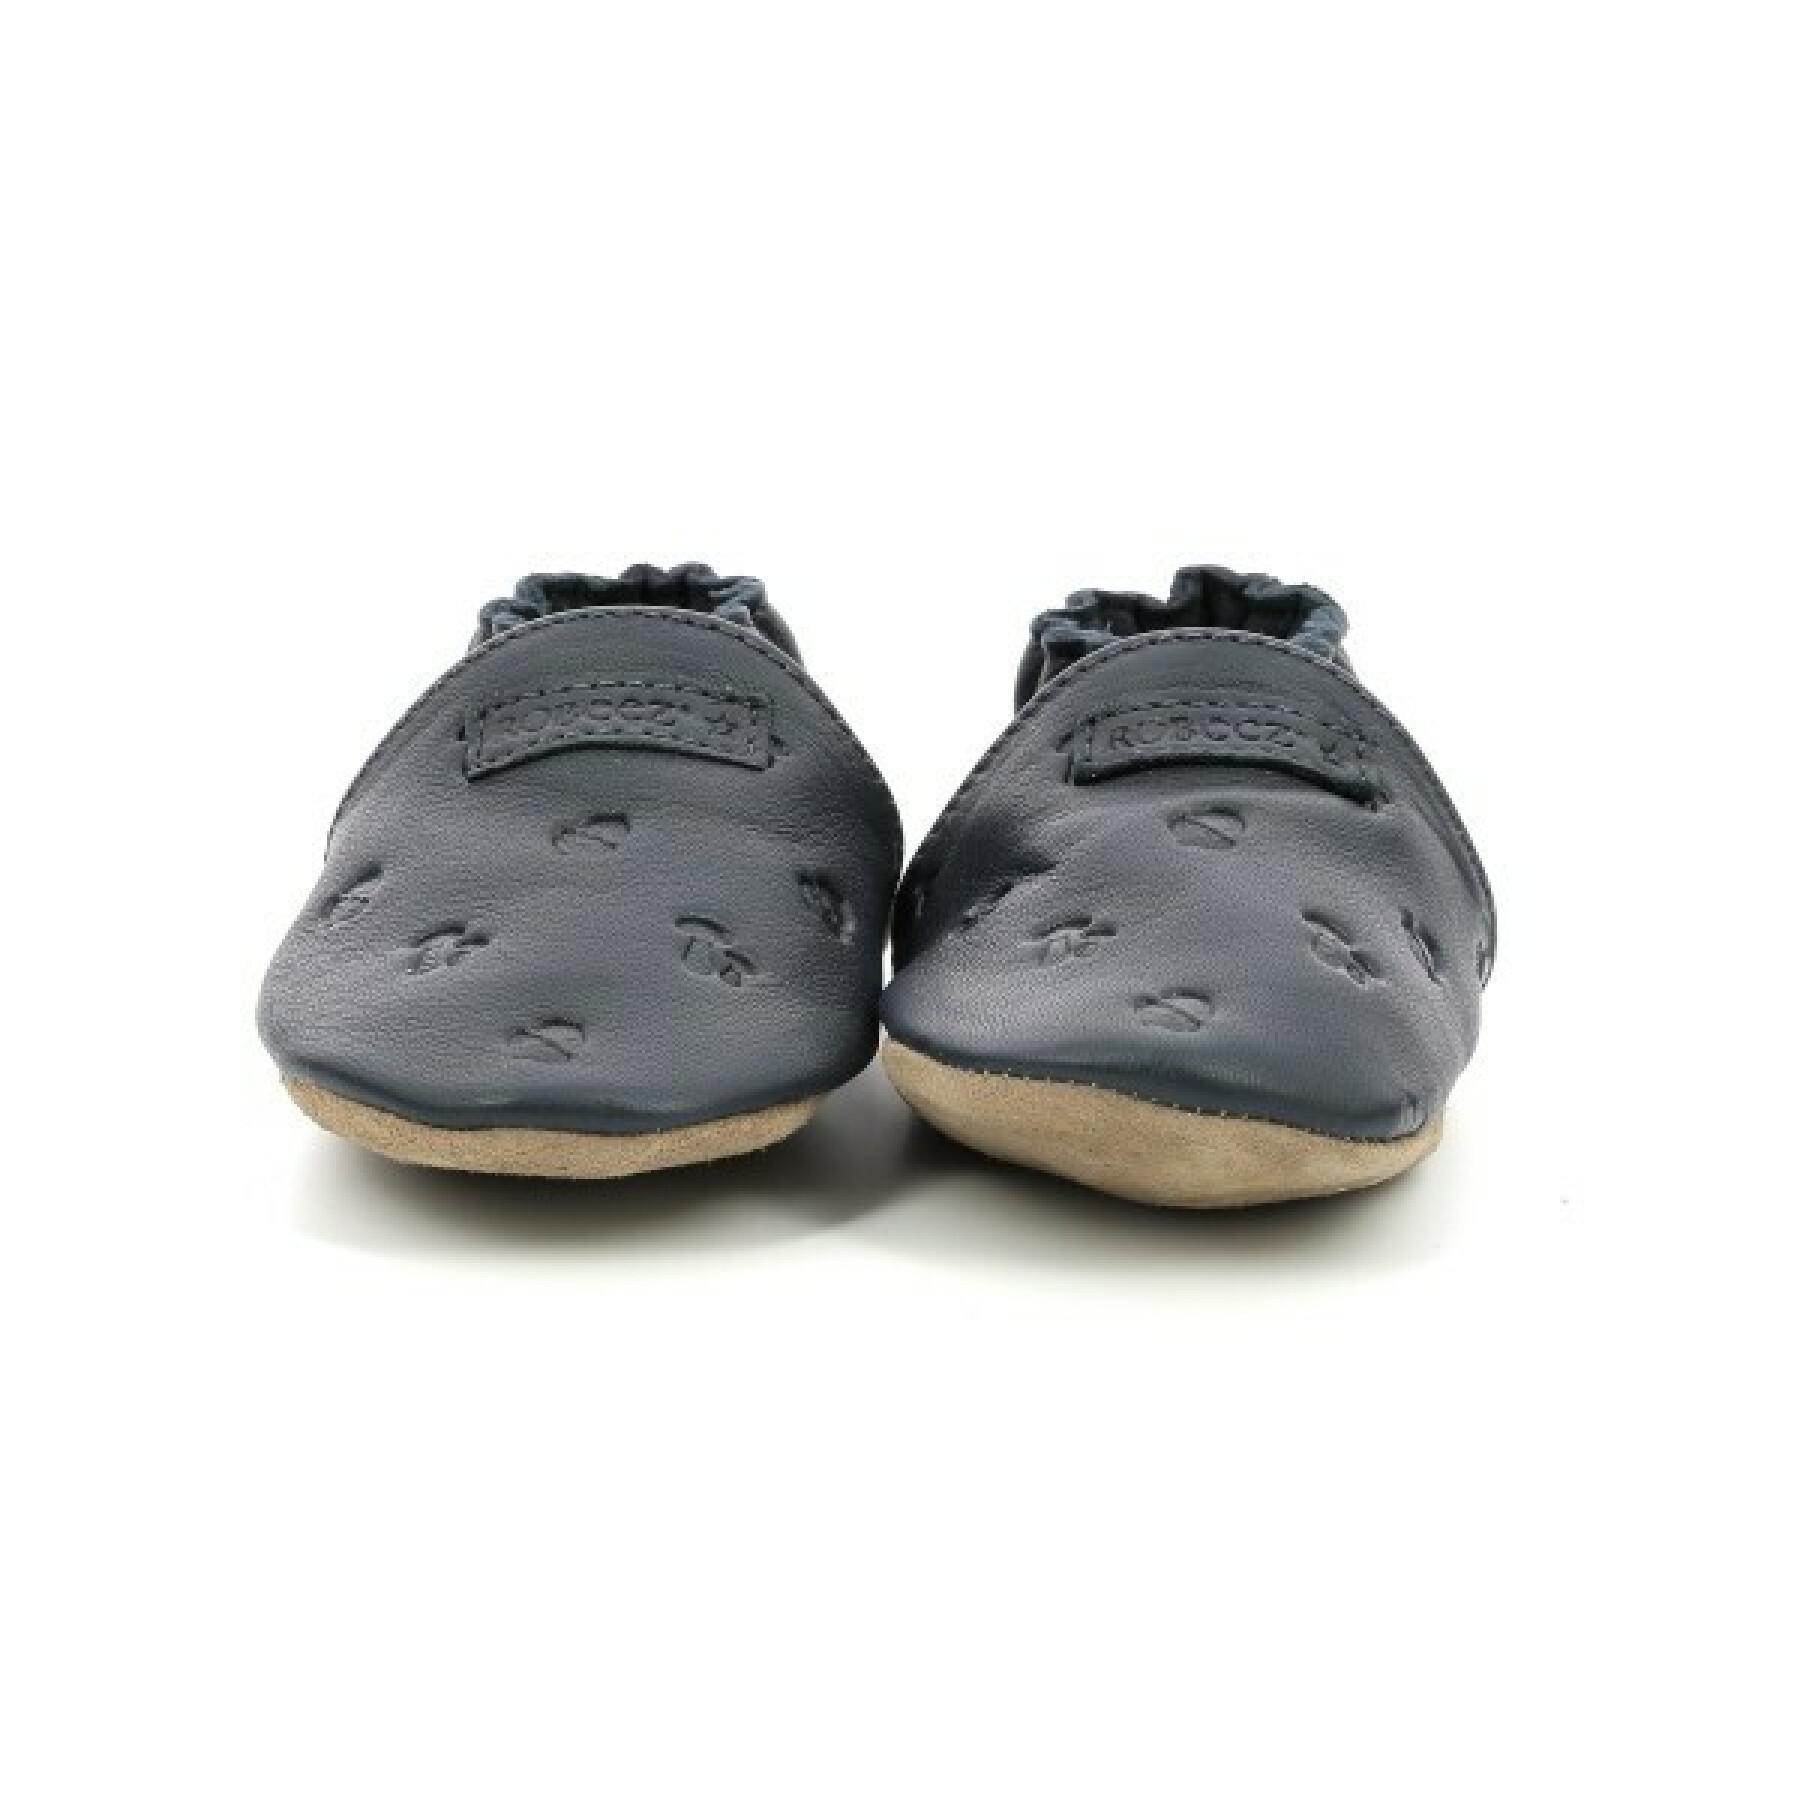 Baby slippers Robeez mywood marine